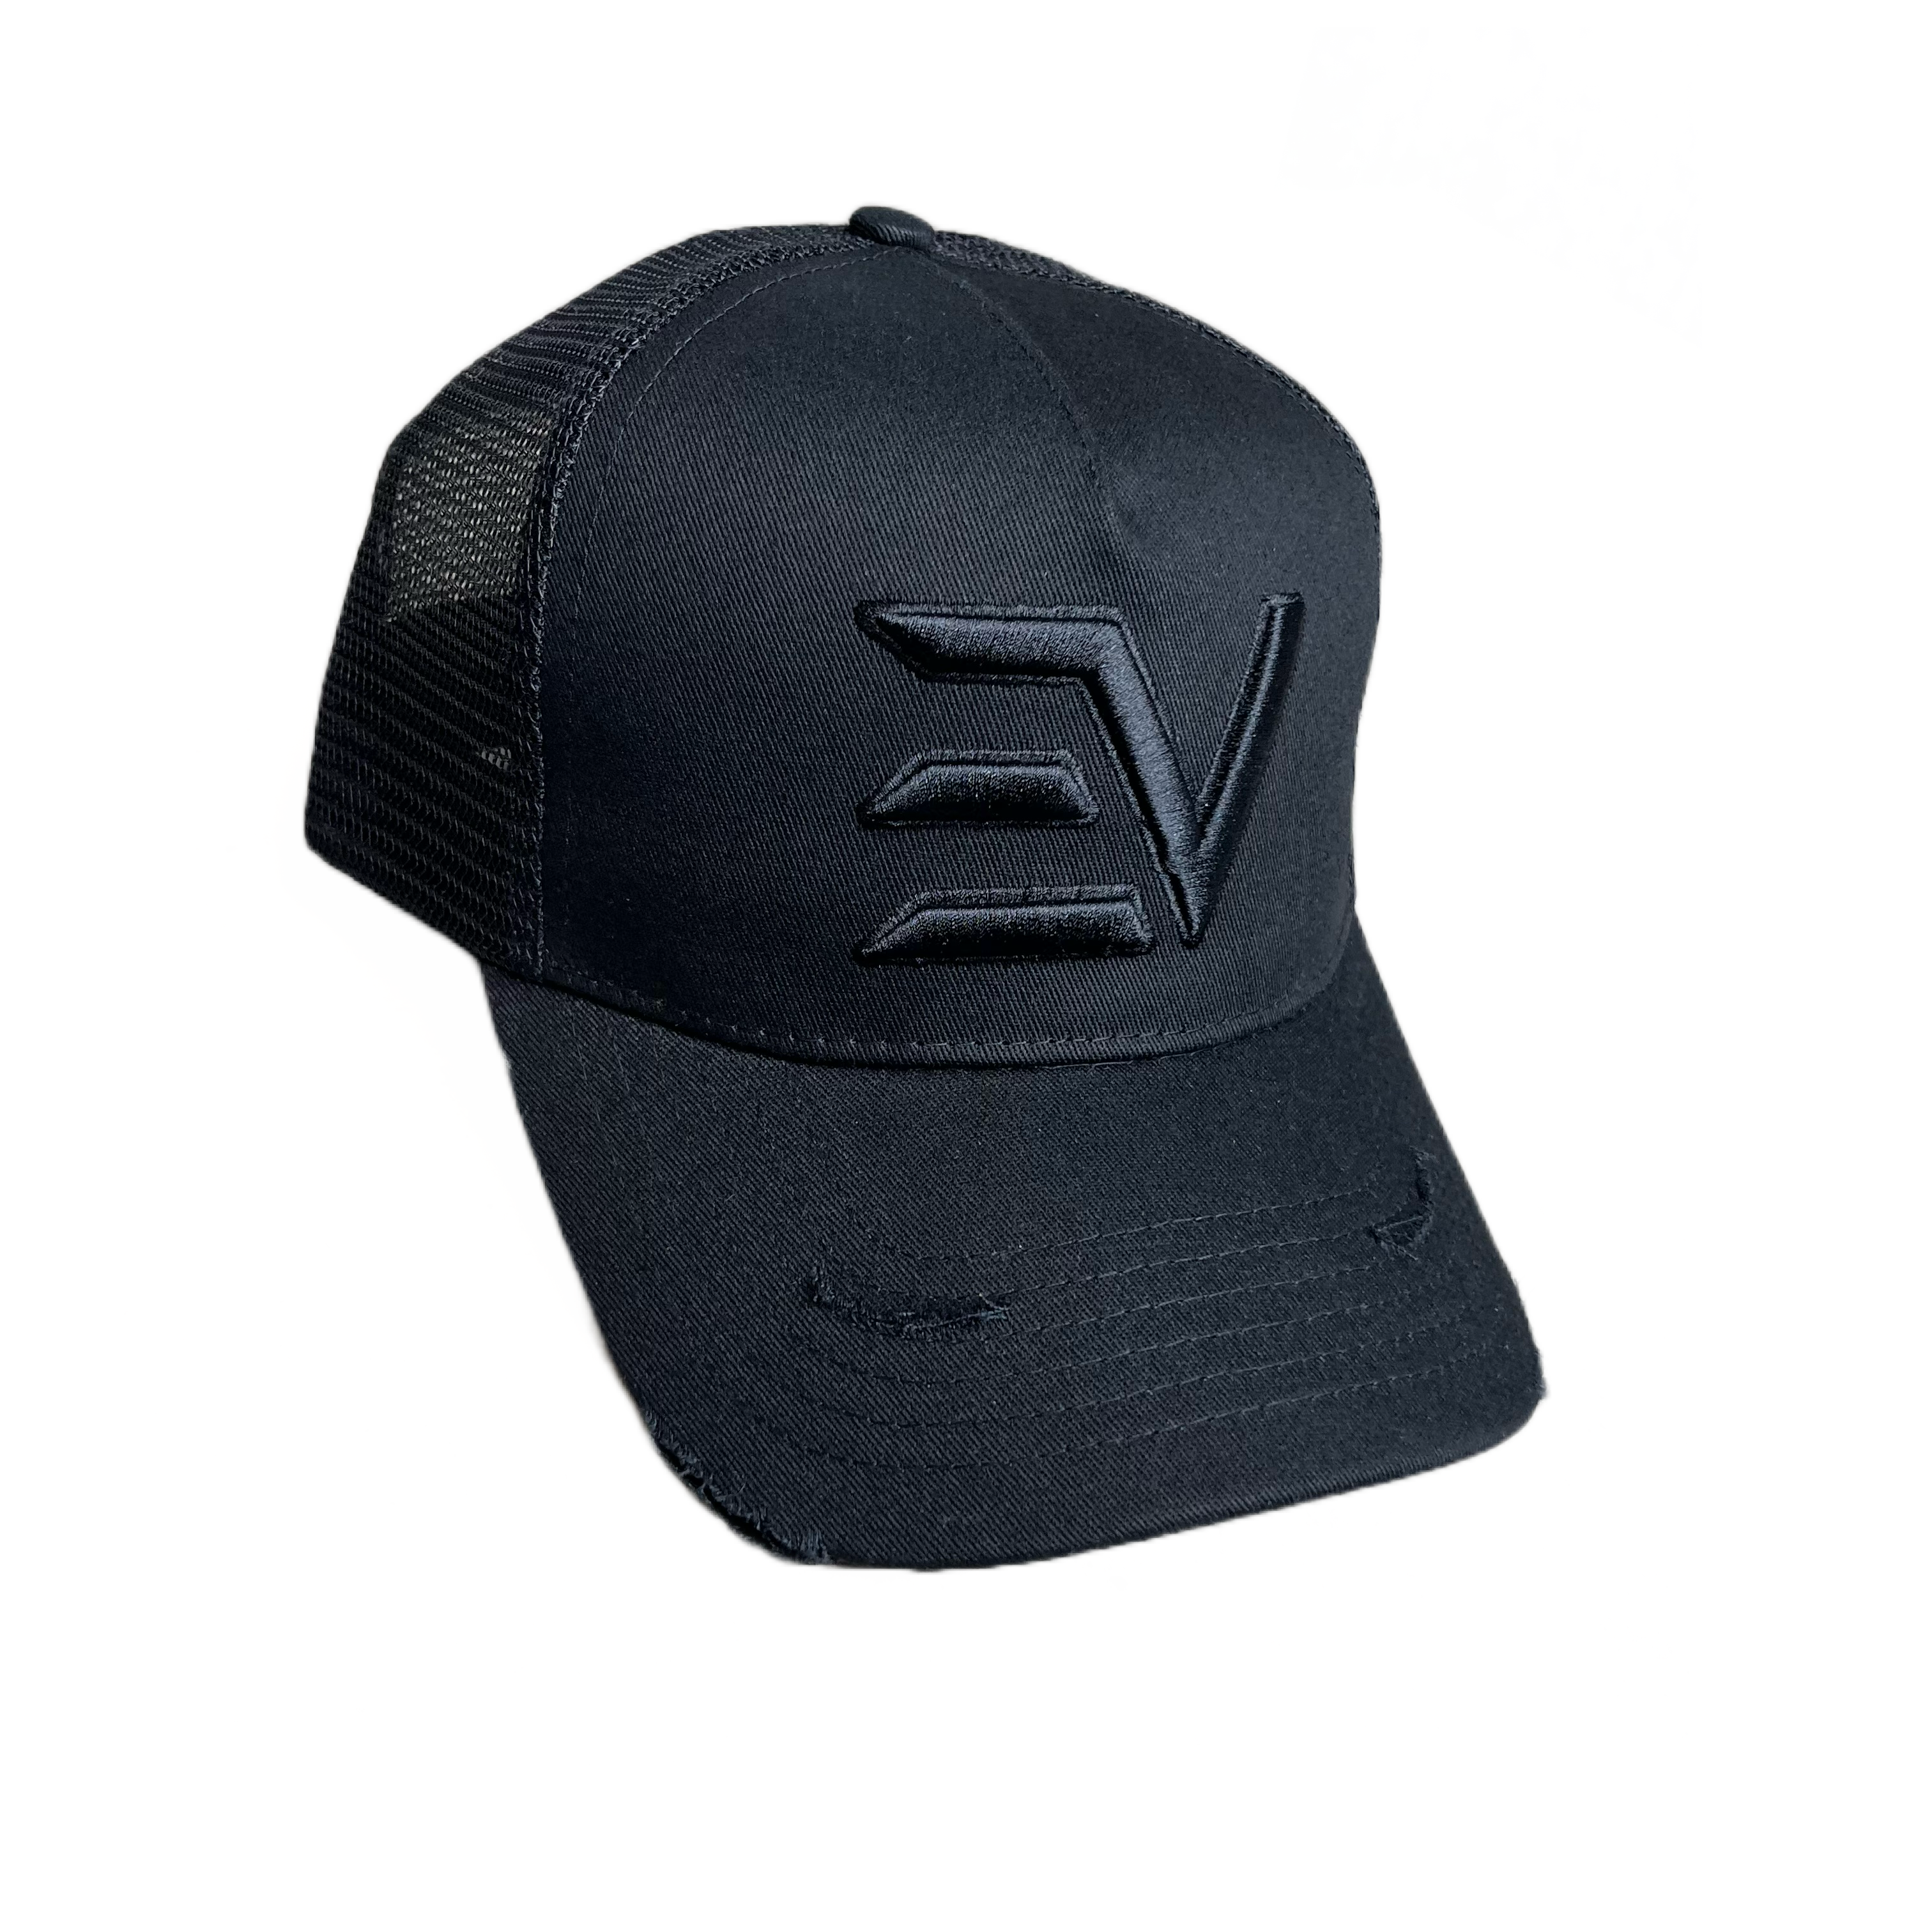 EV Logo Trucker Cap “Blacked Out”